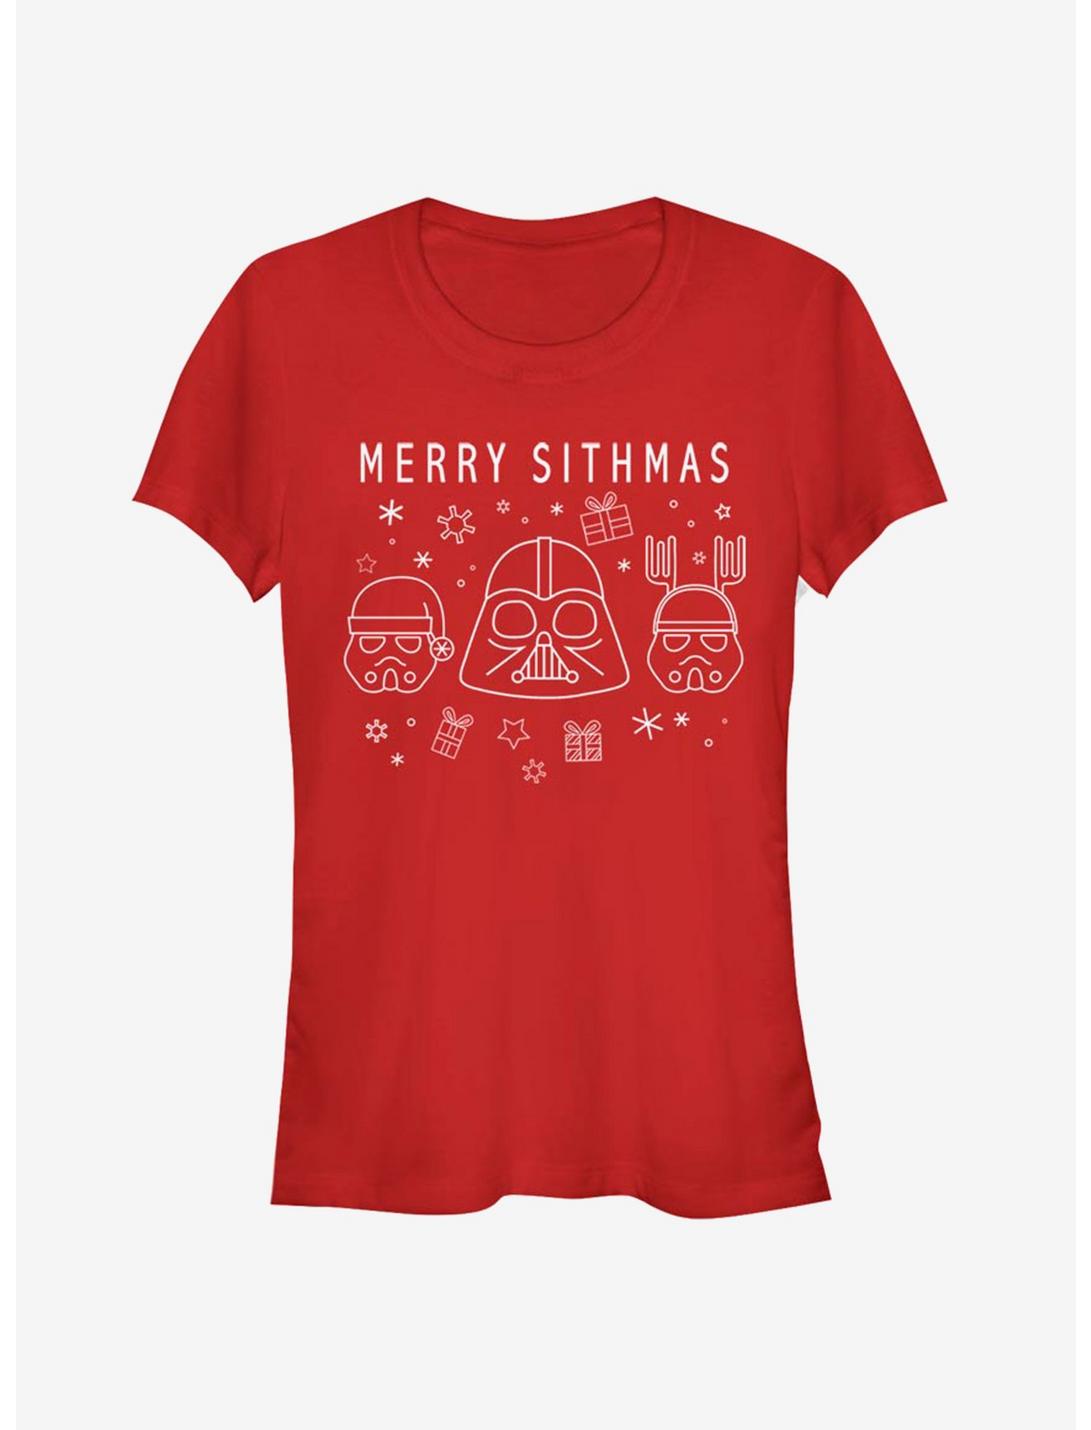 Star Wars Villain Lineart Merry Sithmas Girls T-Shirt, RED, hi-res